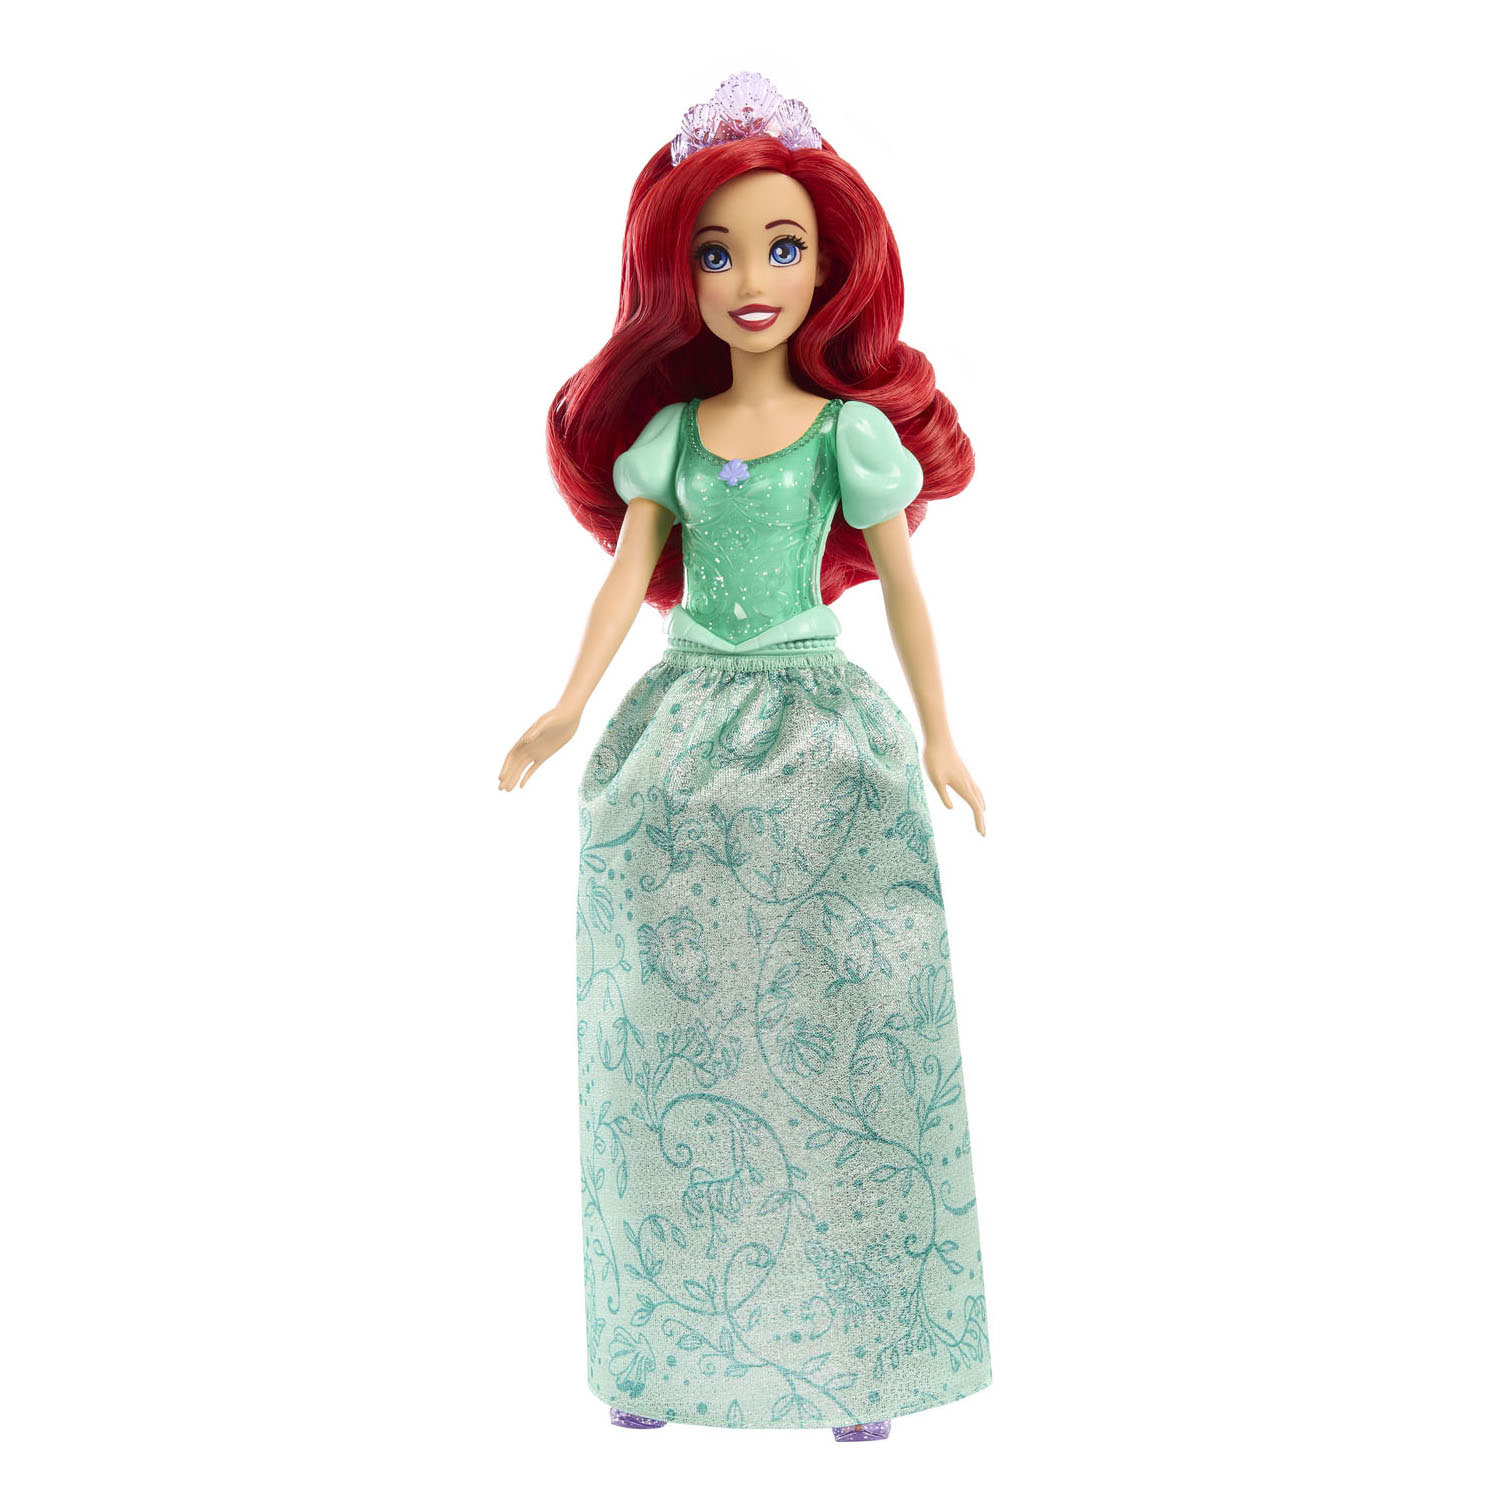 Won Validatie Fonetiek Disney Princess Ariel Doll | Thimble Toys